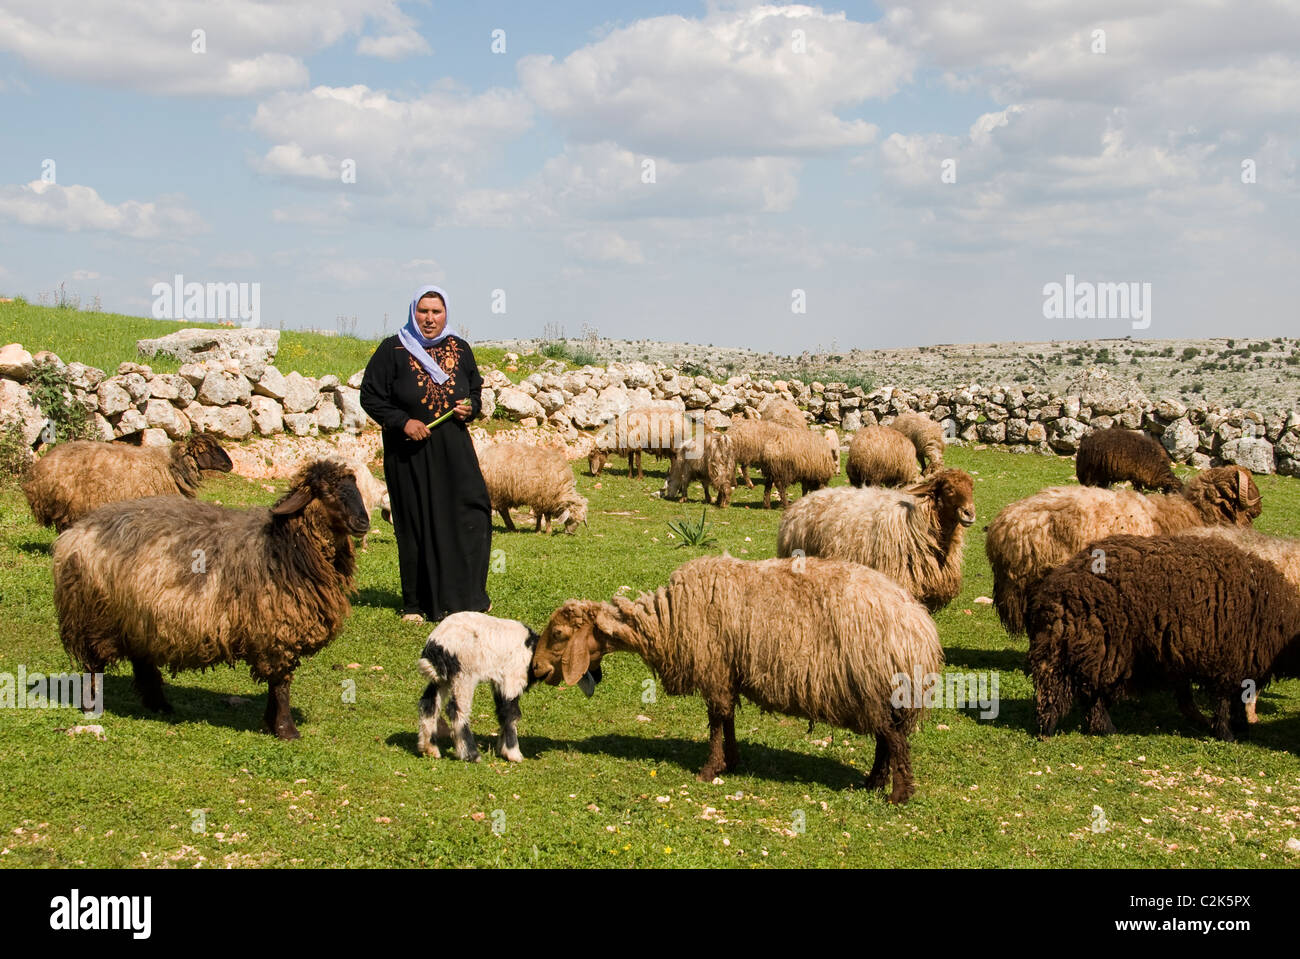 Woman Syria desert farm farmer sheep Bedouin  Bedouins Stock Photo